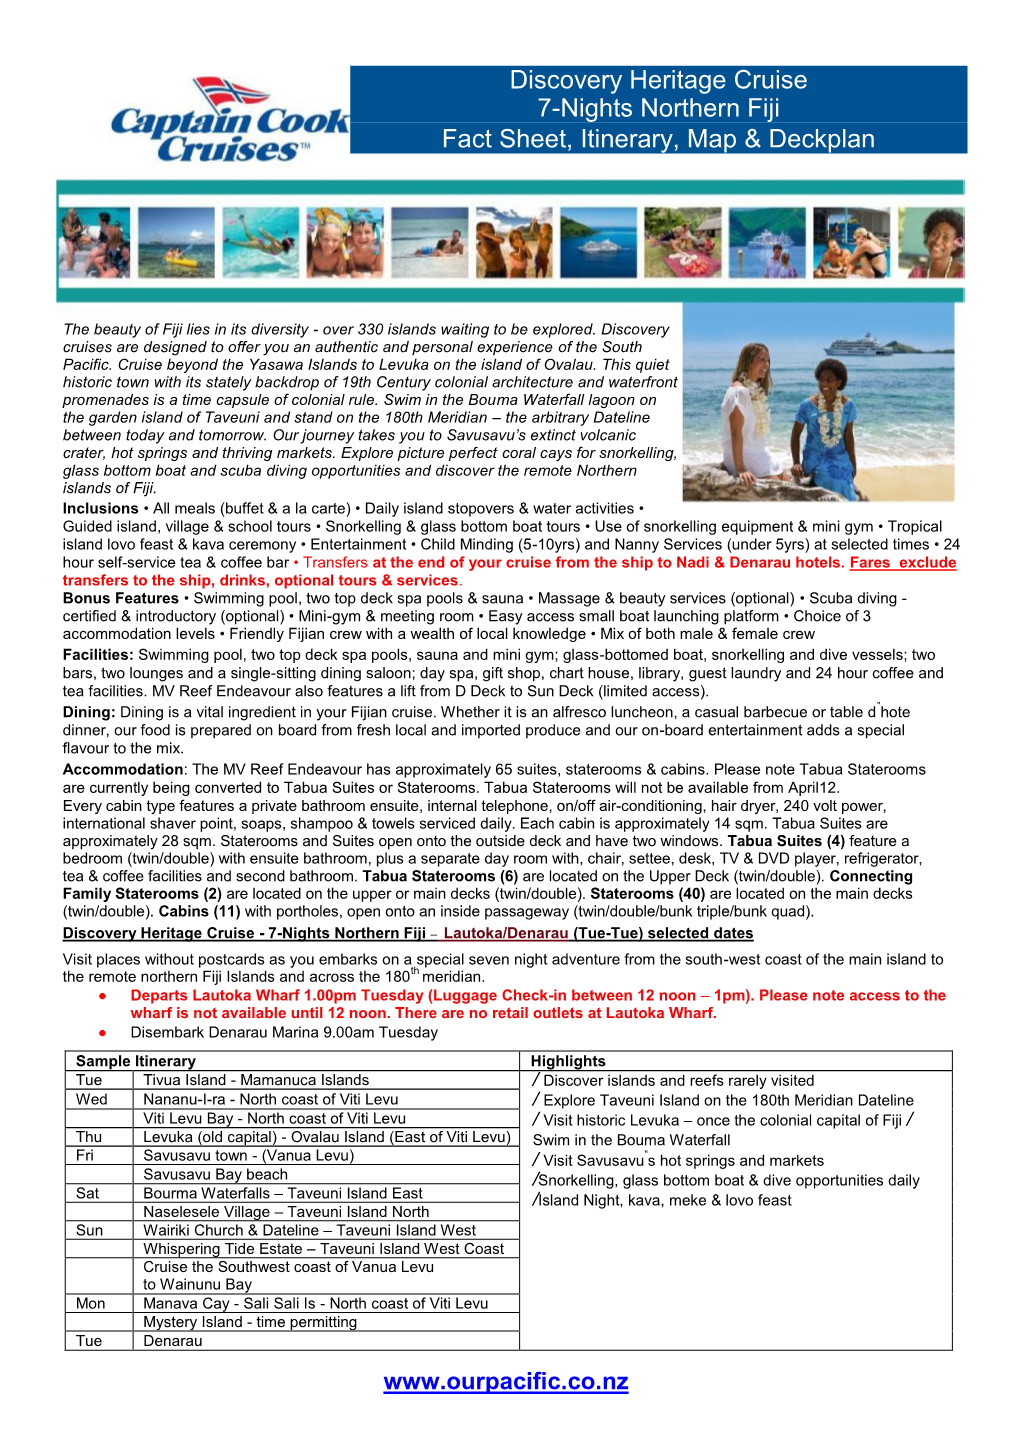 Discovery Heritage Cruise 7-Nights Northern Fiji Fact Sheet, Itinerary, Map & Deckplan